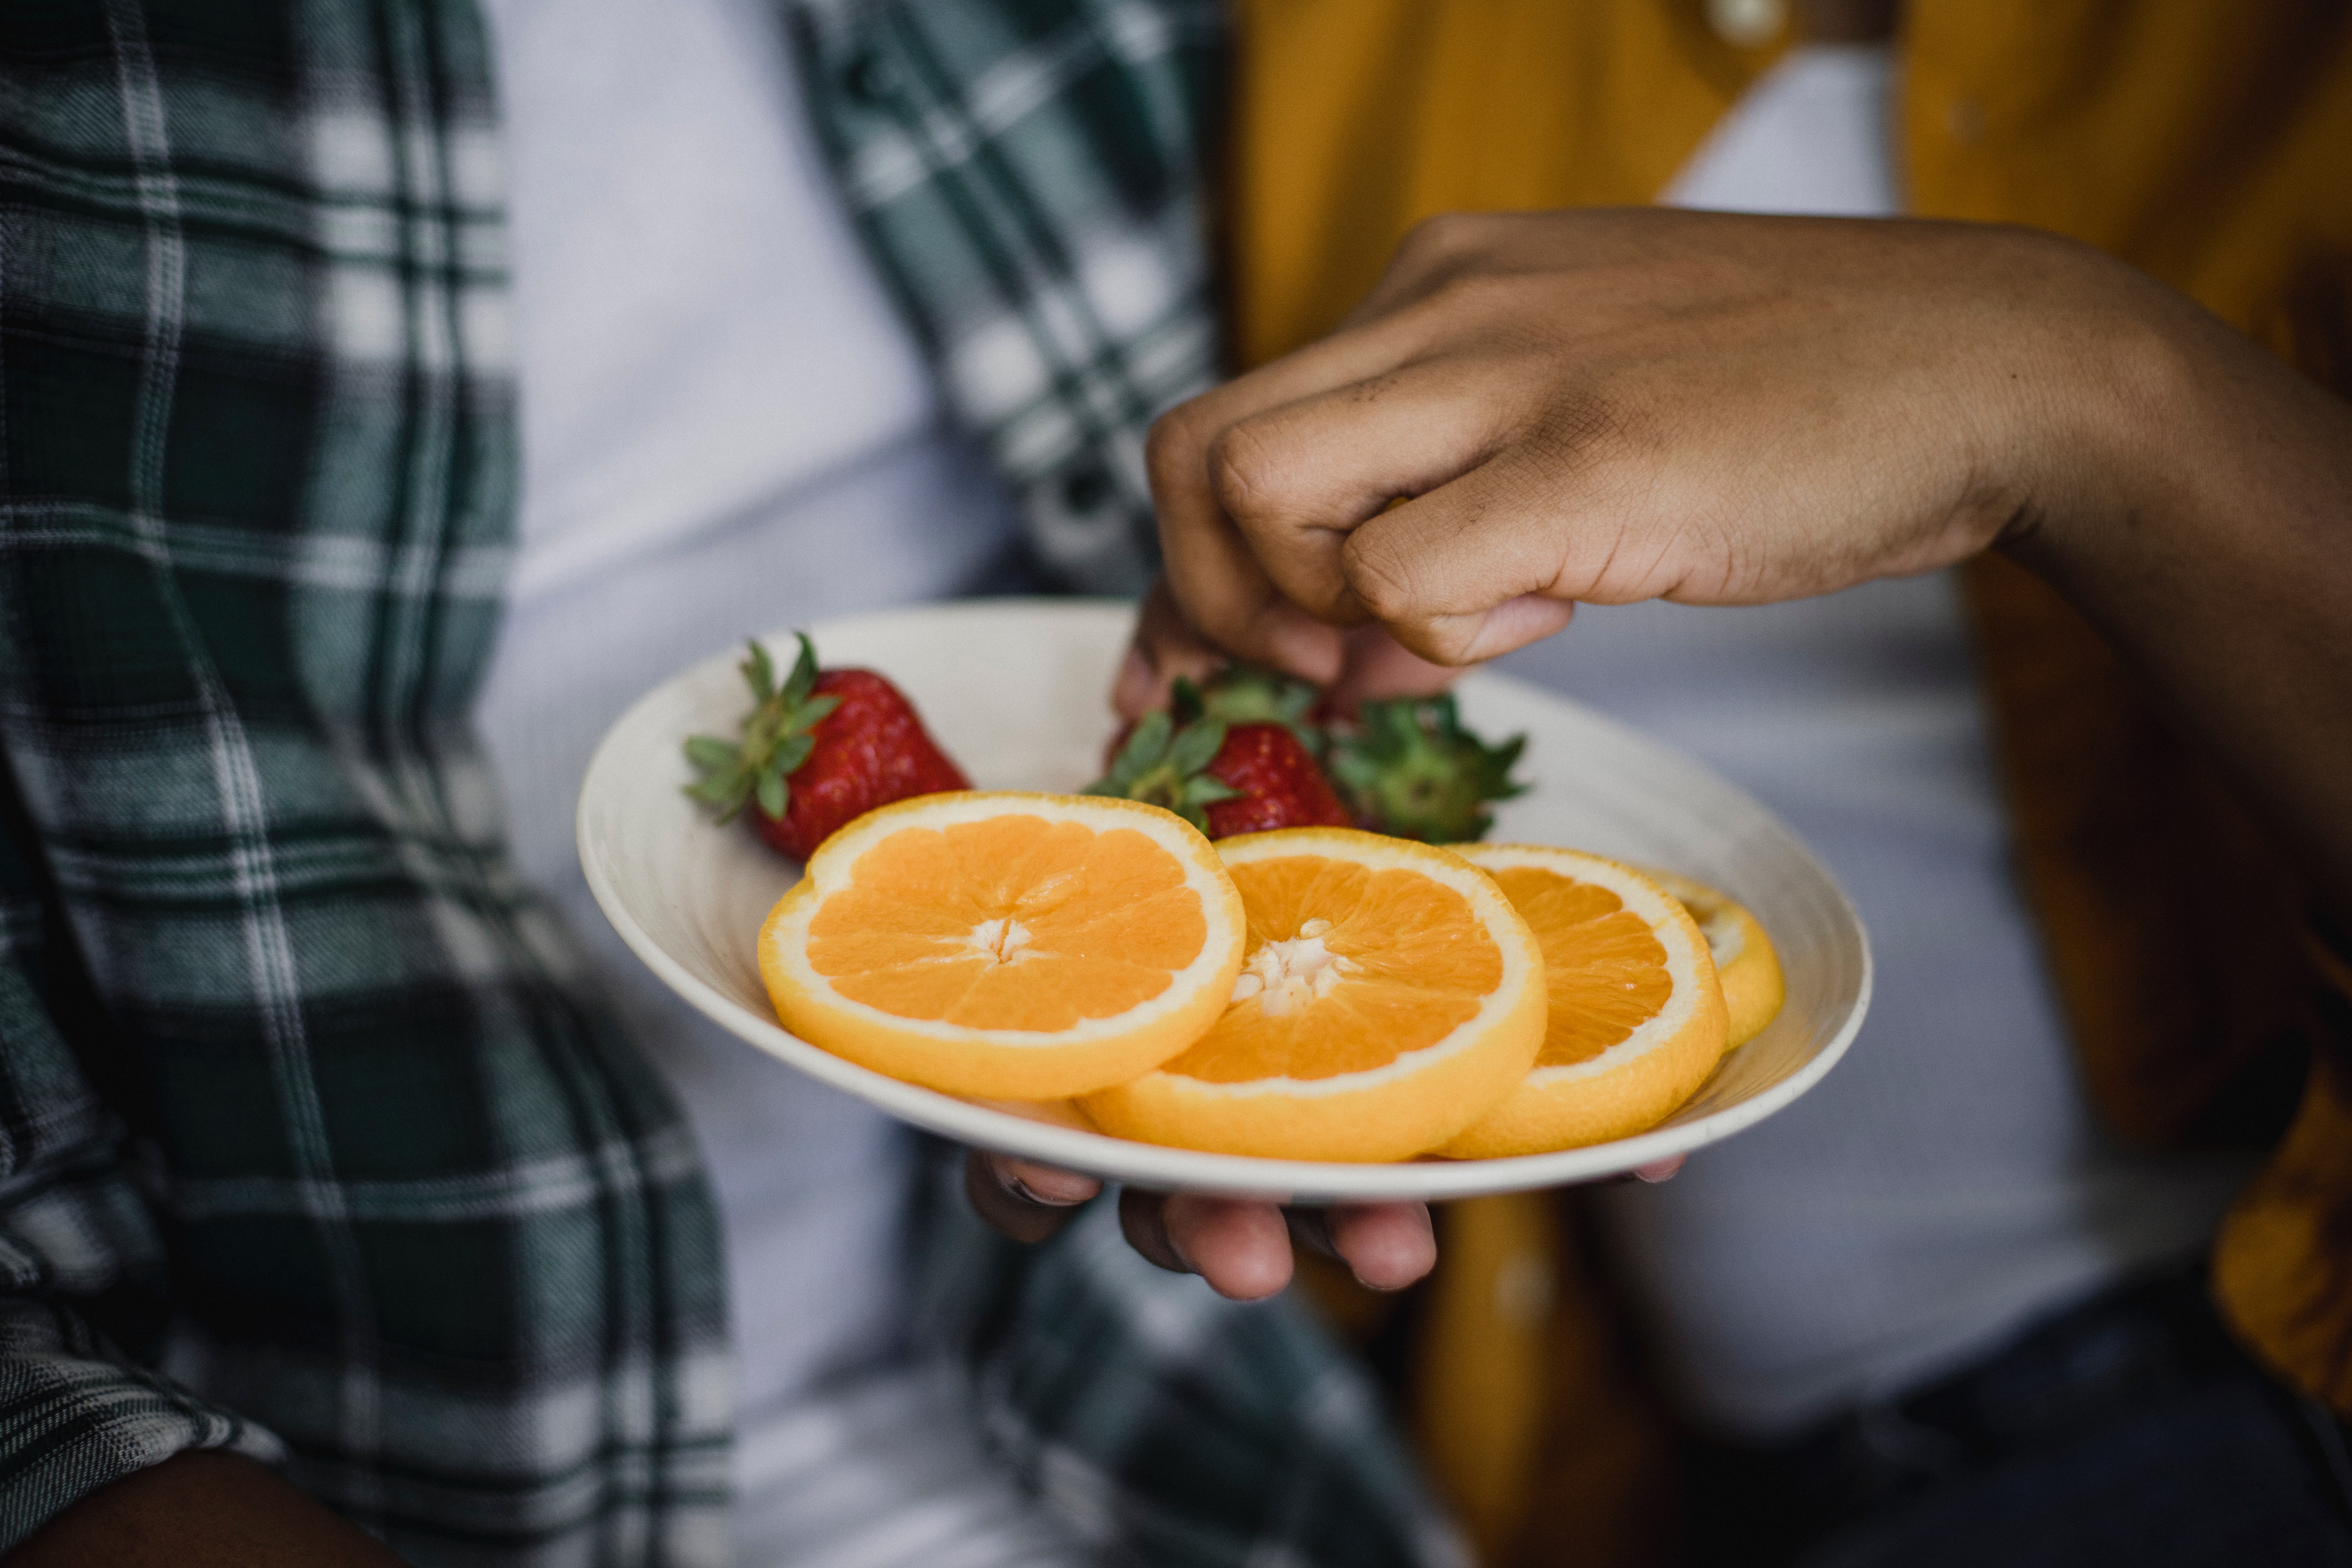 Perbanyak makan buah adalah salah satu cara menjaga berat badan setelah Lebaran (Sumber gambar: Ketut Subiyanto/Pexels)